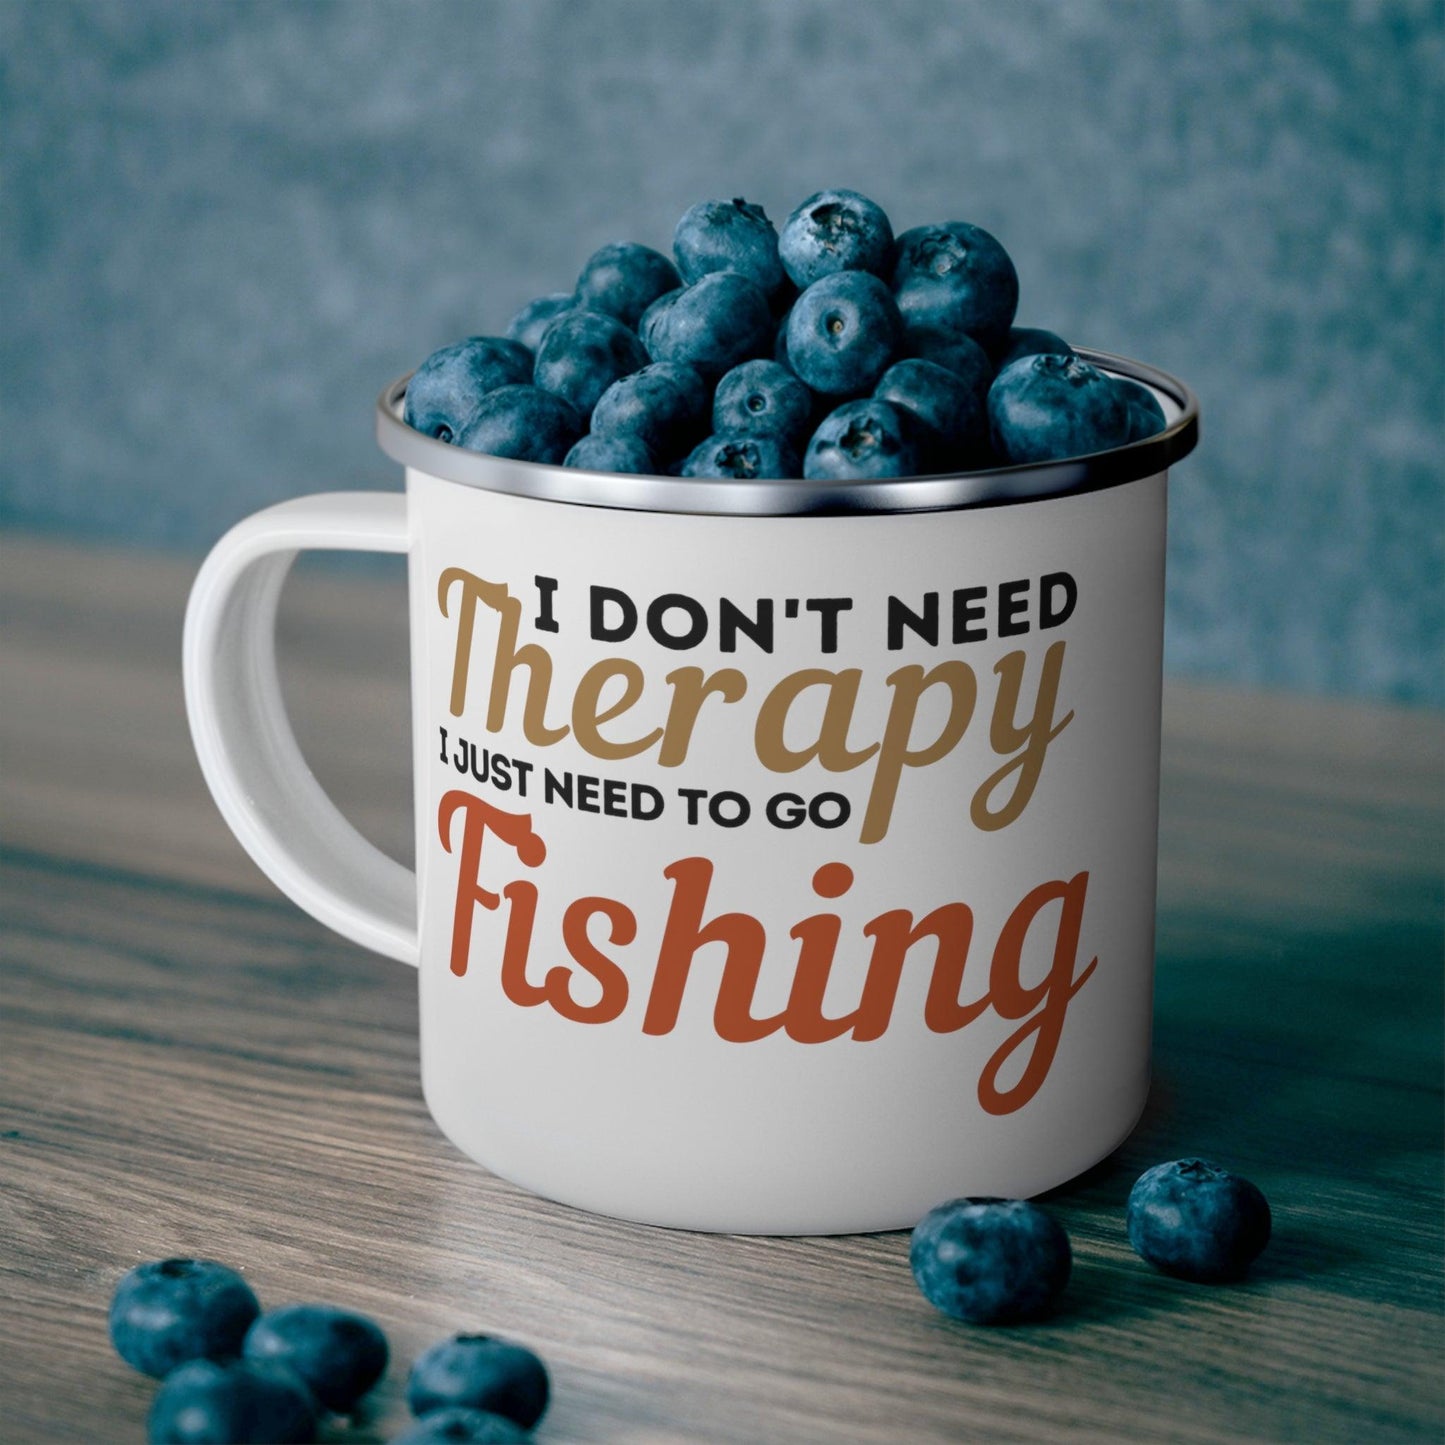 I don't need Therapy fishing Mug, Enamel Fishing Mug, Camping gift, Gift for dad, Father's day gift, Dad Mug, Dad gift